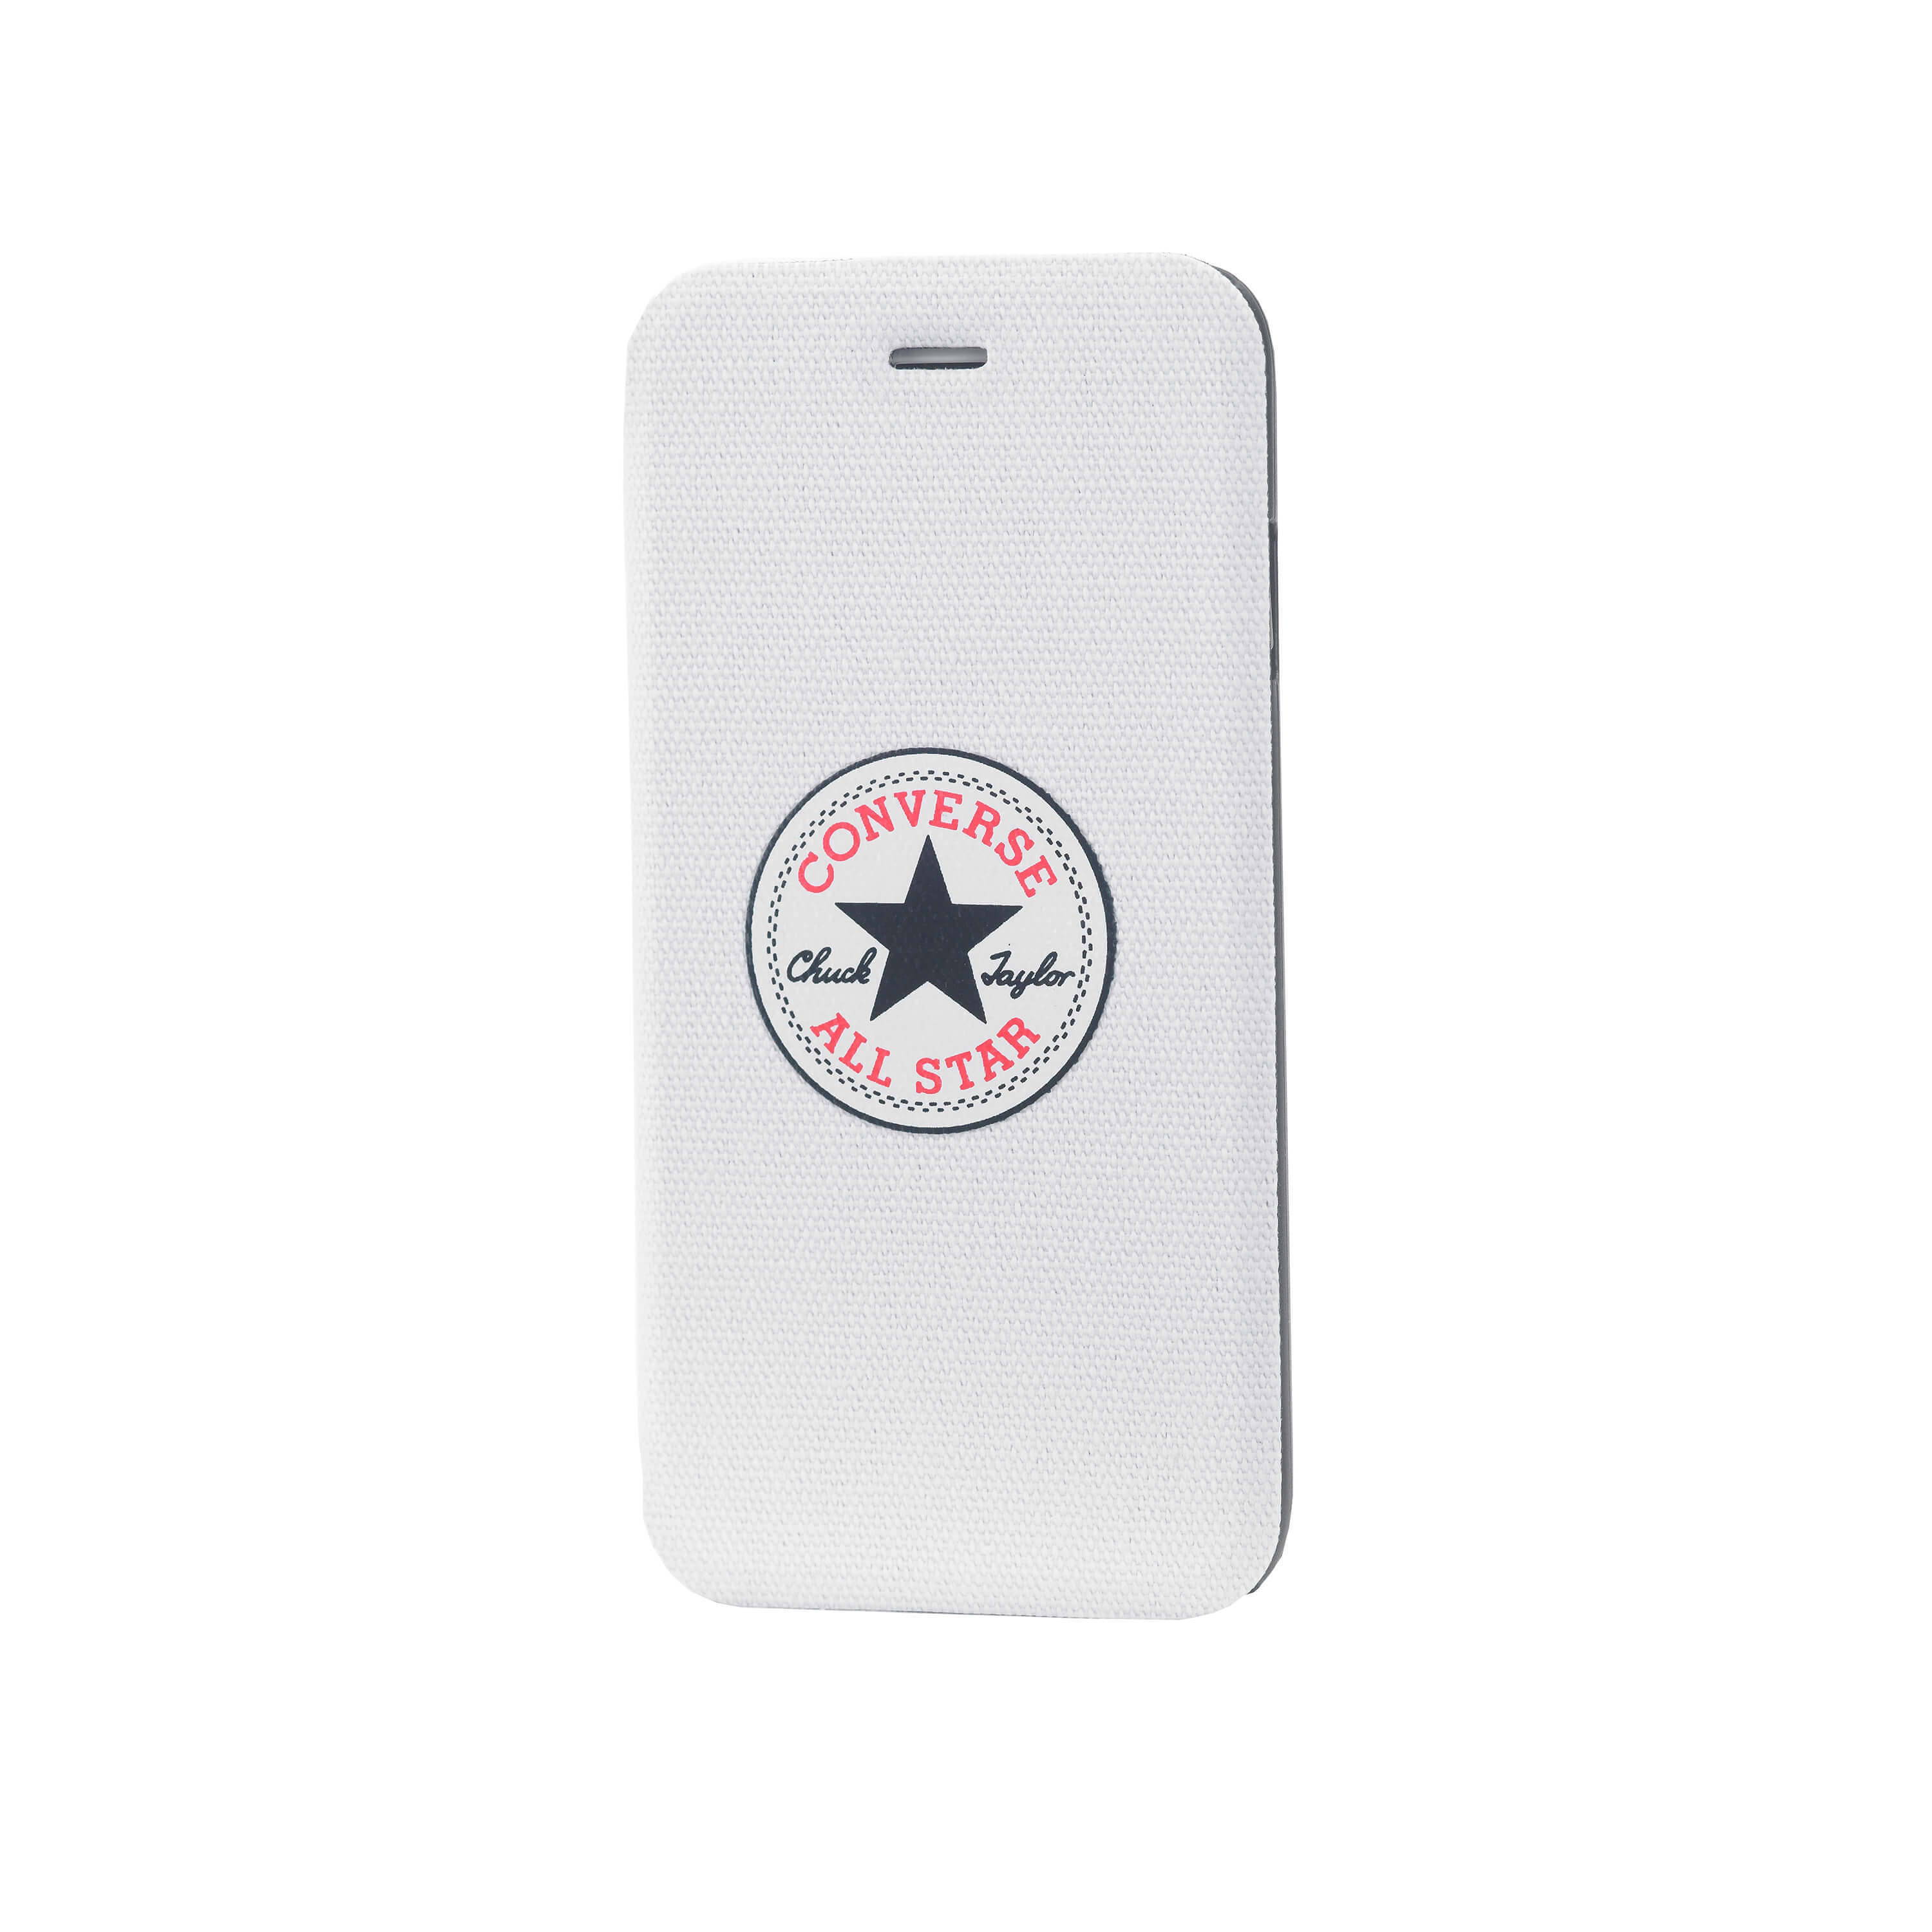 Wallet Case White - iPhone 6 Plus